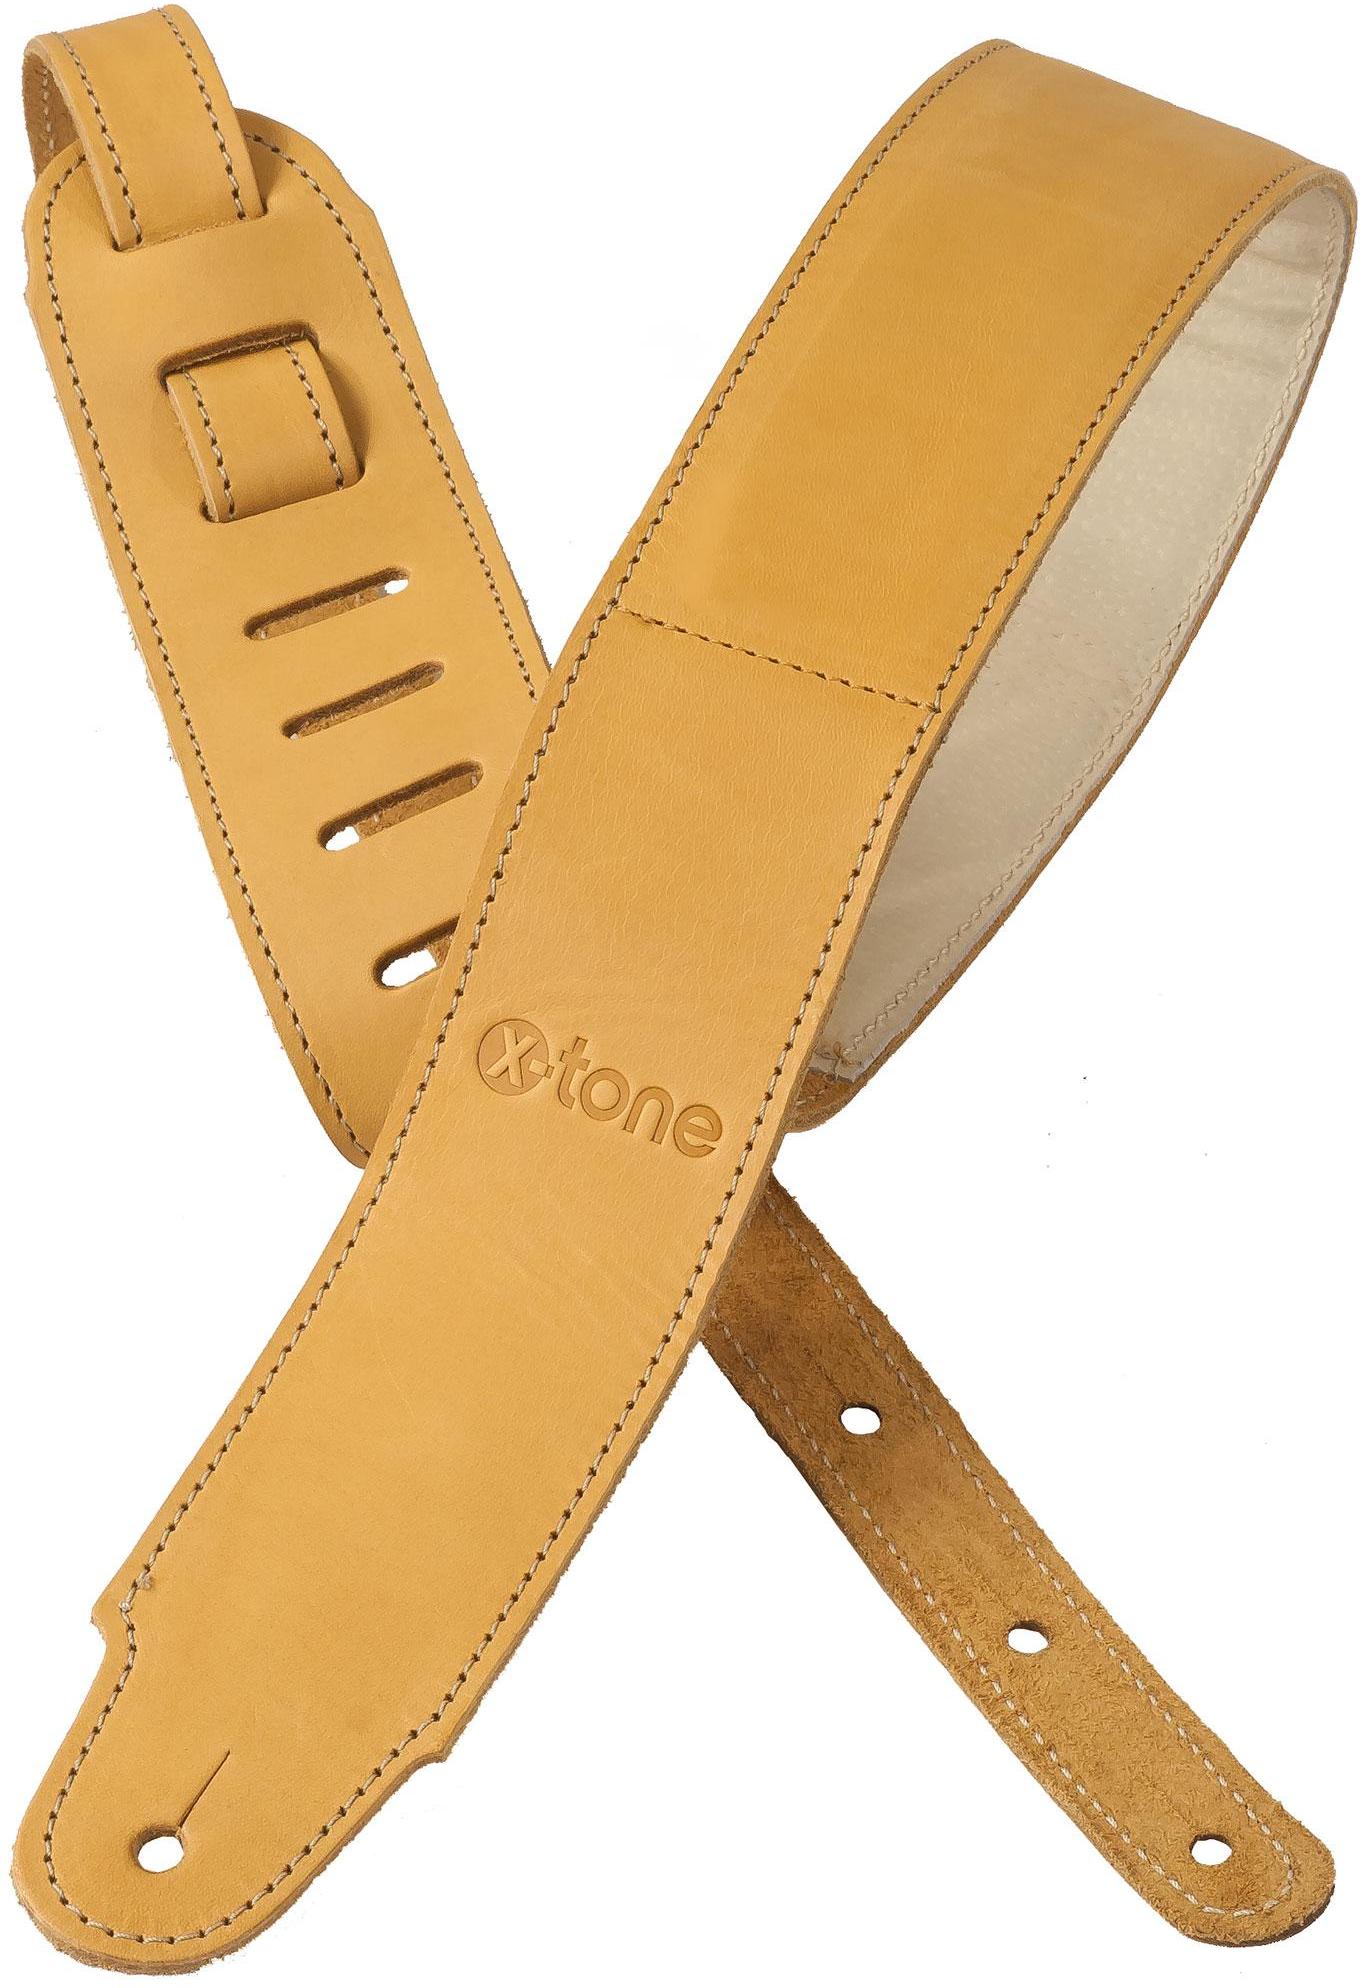 Sangle courroie X-tone xg 3154 Plus Leather Guitar Strap - Brownstone Beige